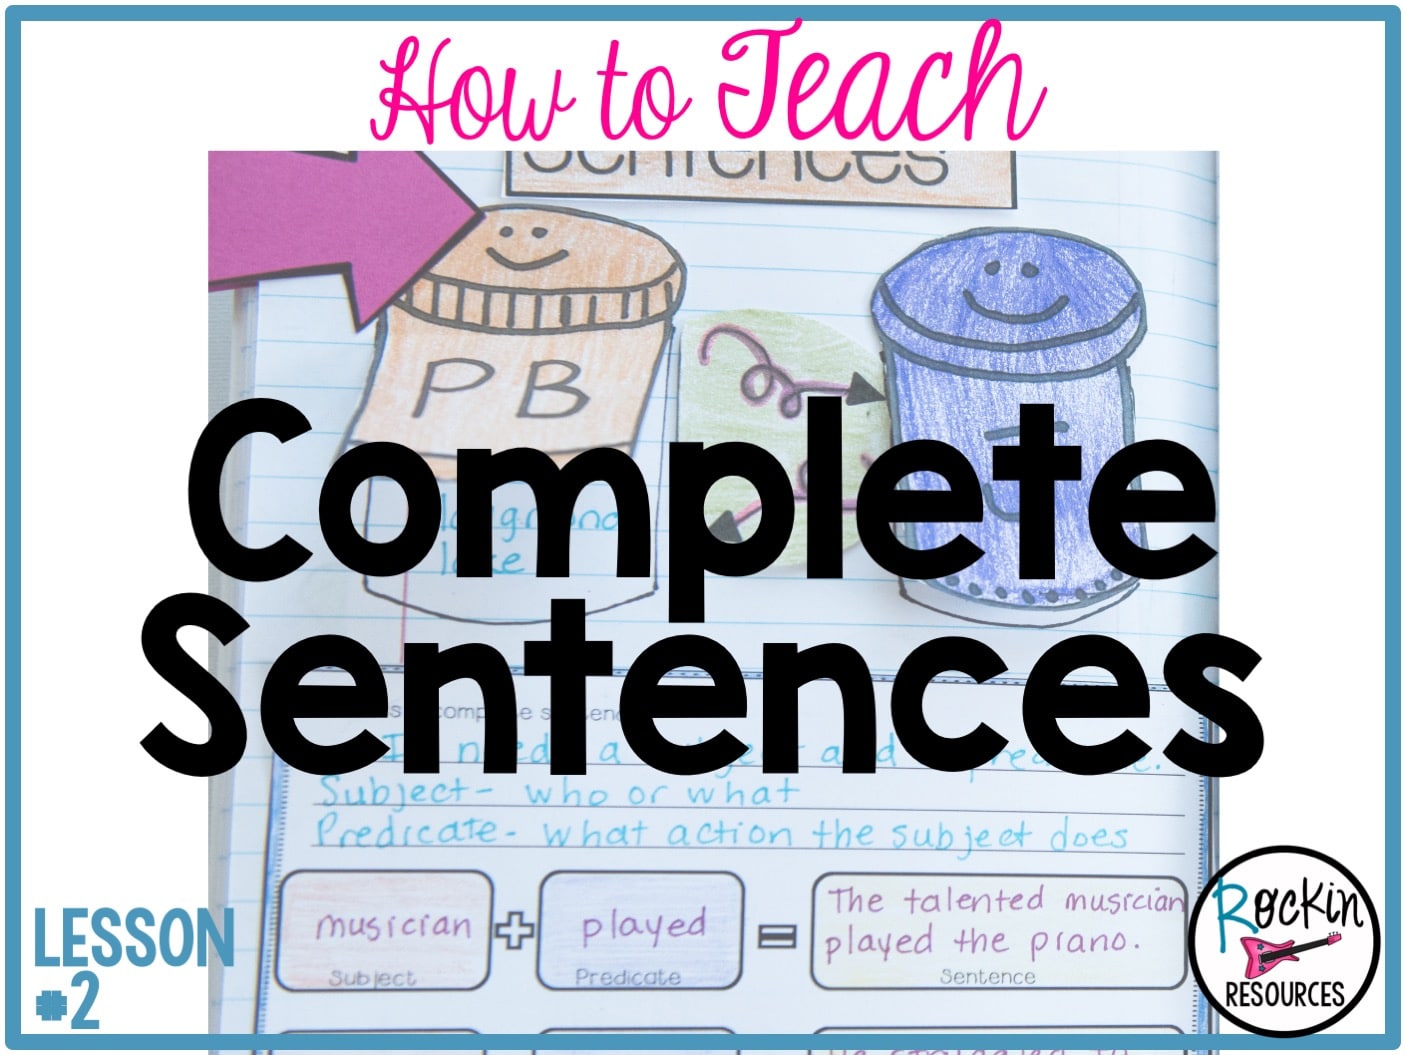 rewriting-incomplete-sentences-worksheet-by-teach-simple